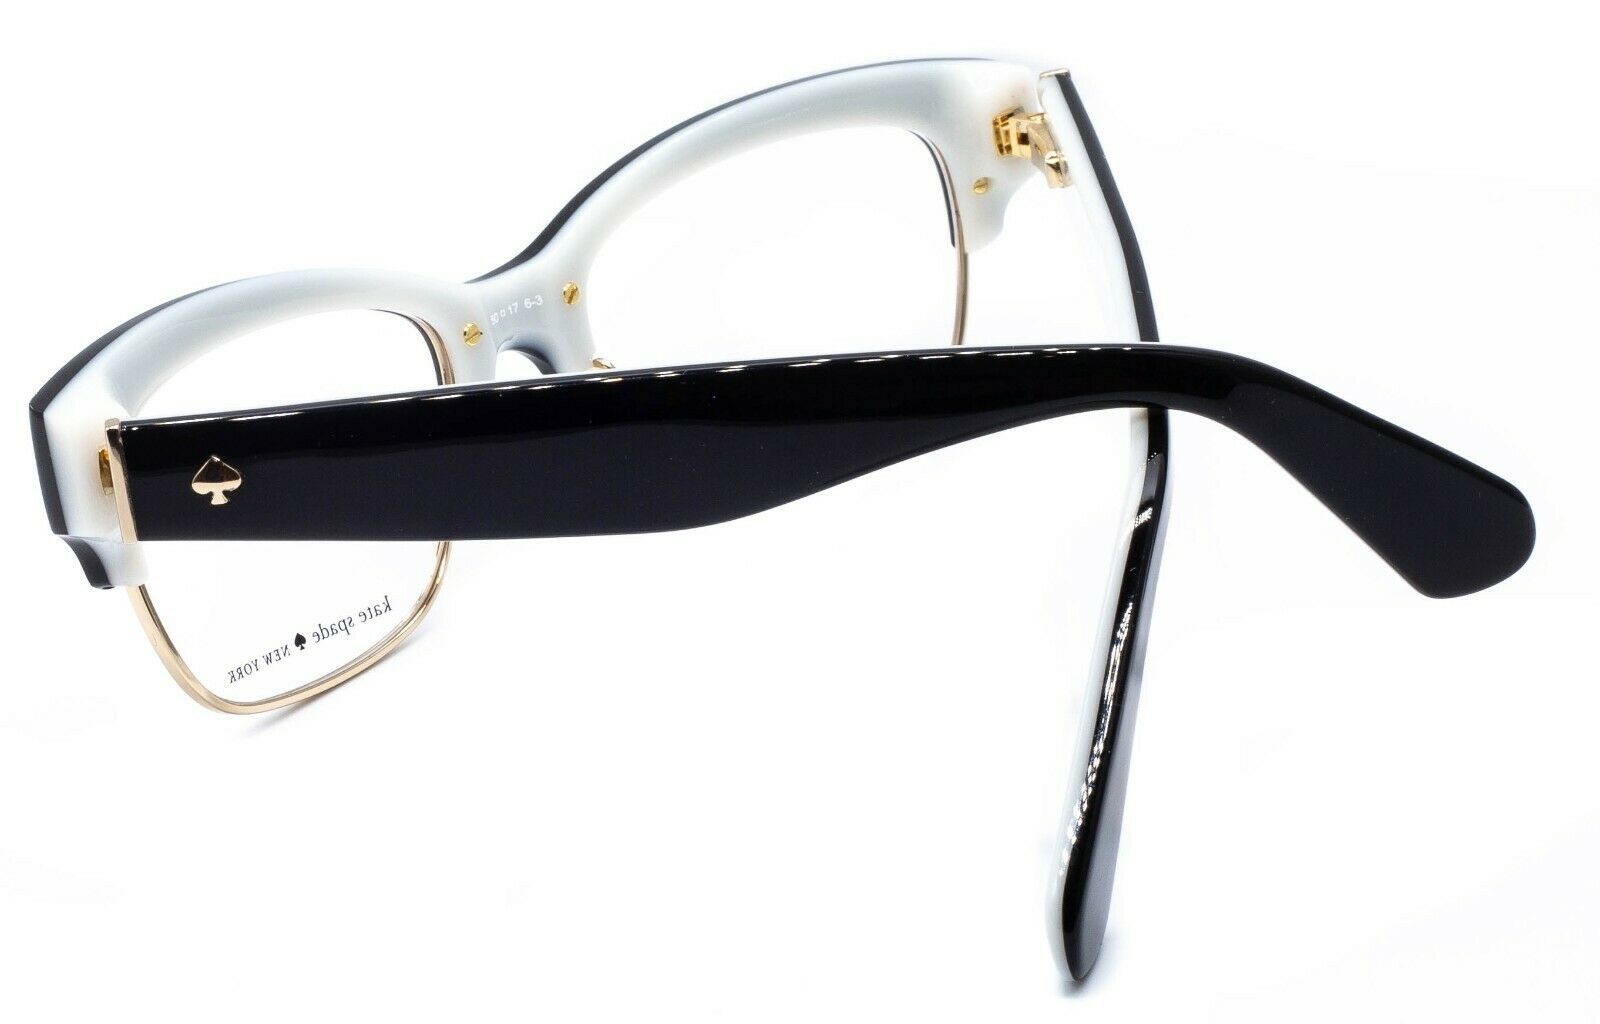 KATE SPADE NEW YORK SHANTAL 0QOP 50mm Eyewear FRAMES Glasses RX Optical - New